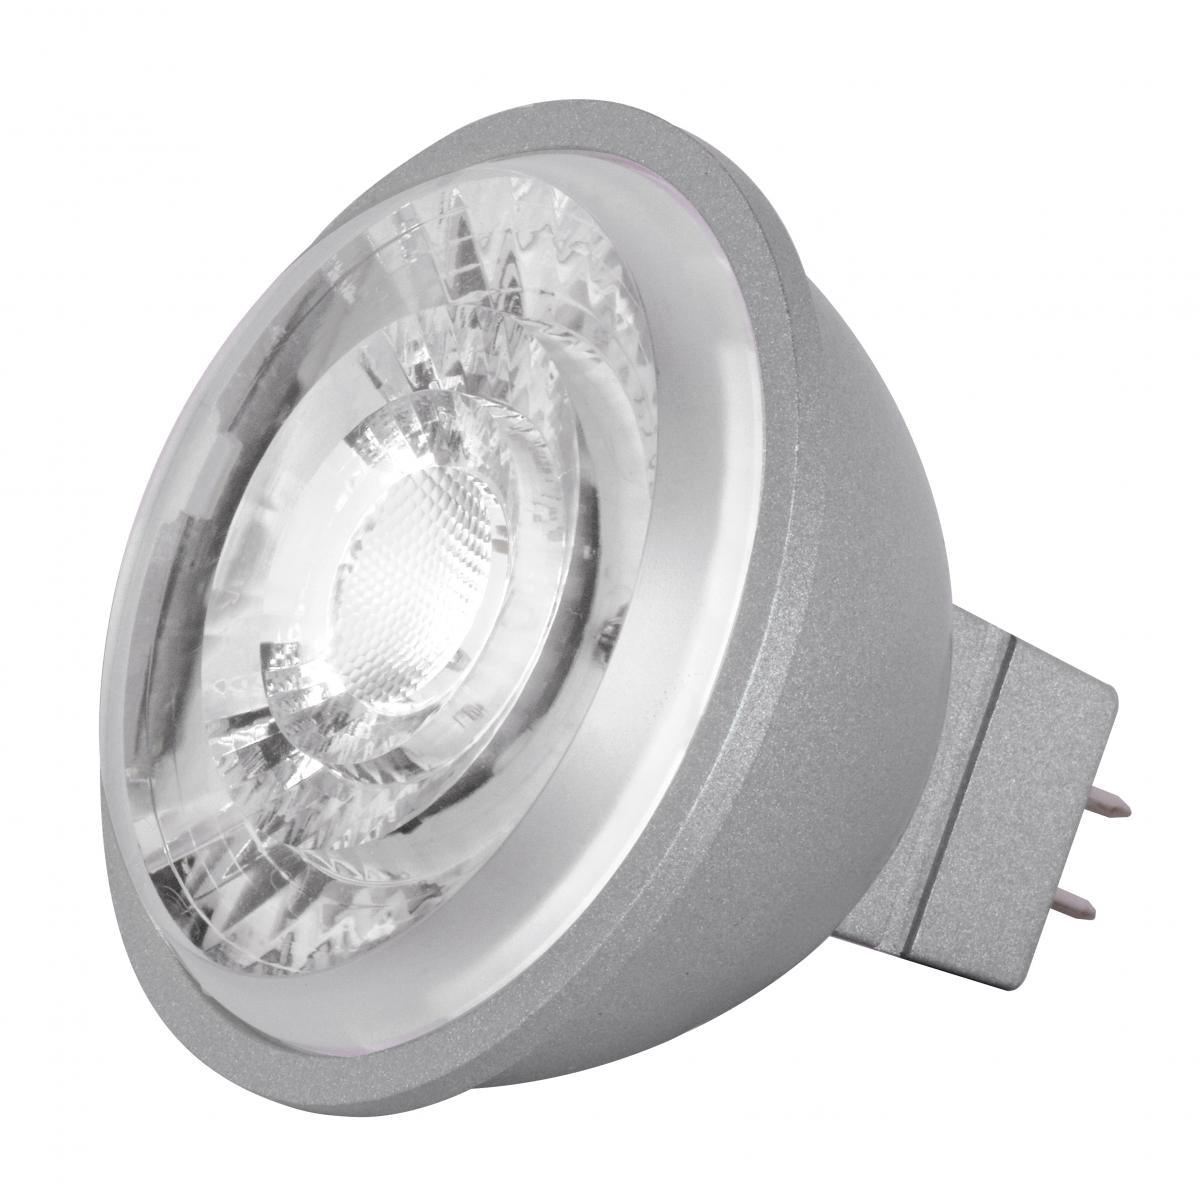 MR16 Reflector LED bulb, 8 watt, 490 Lumens, 3500K, GU5.3 Base, 15 Deg. Spot